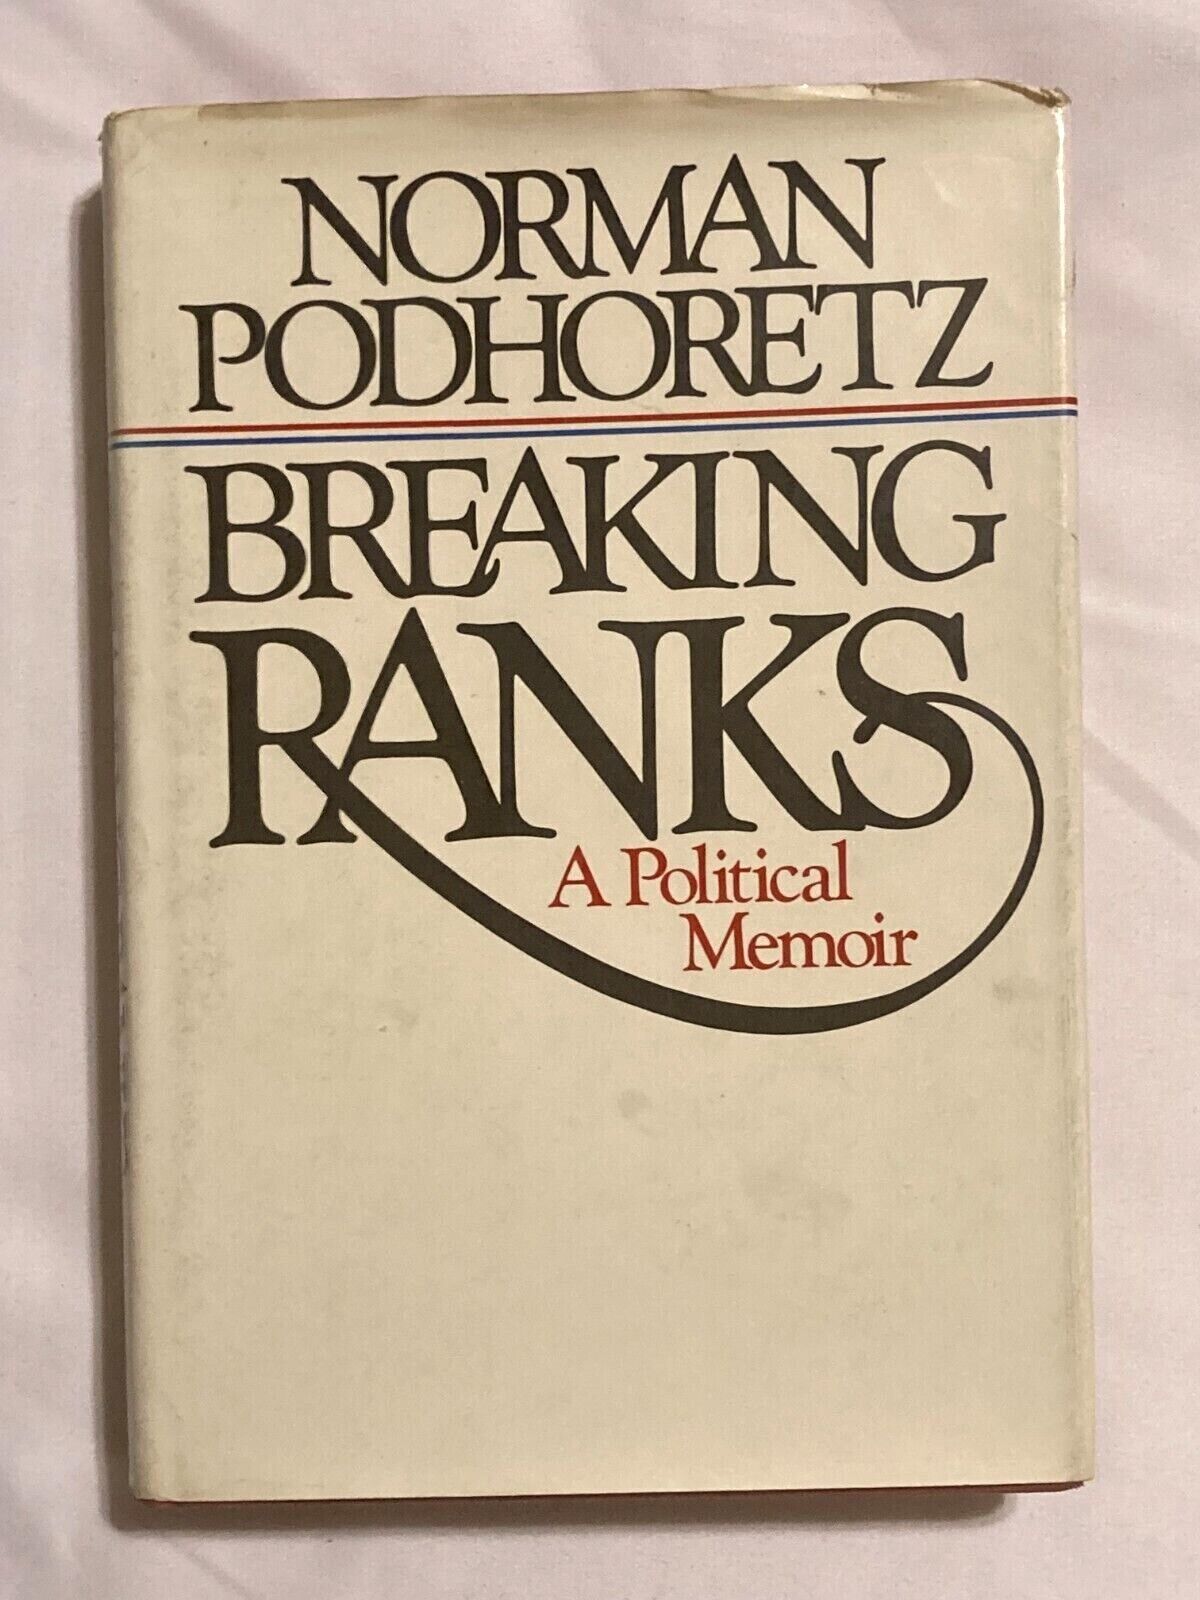 Breaking ranks a political memoir by norman podhoretz